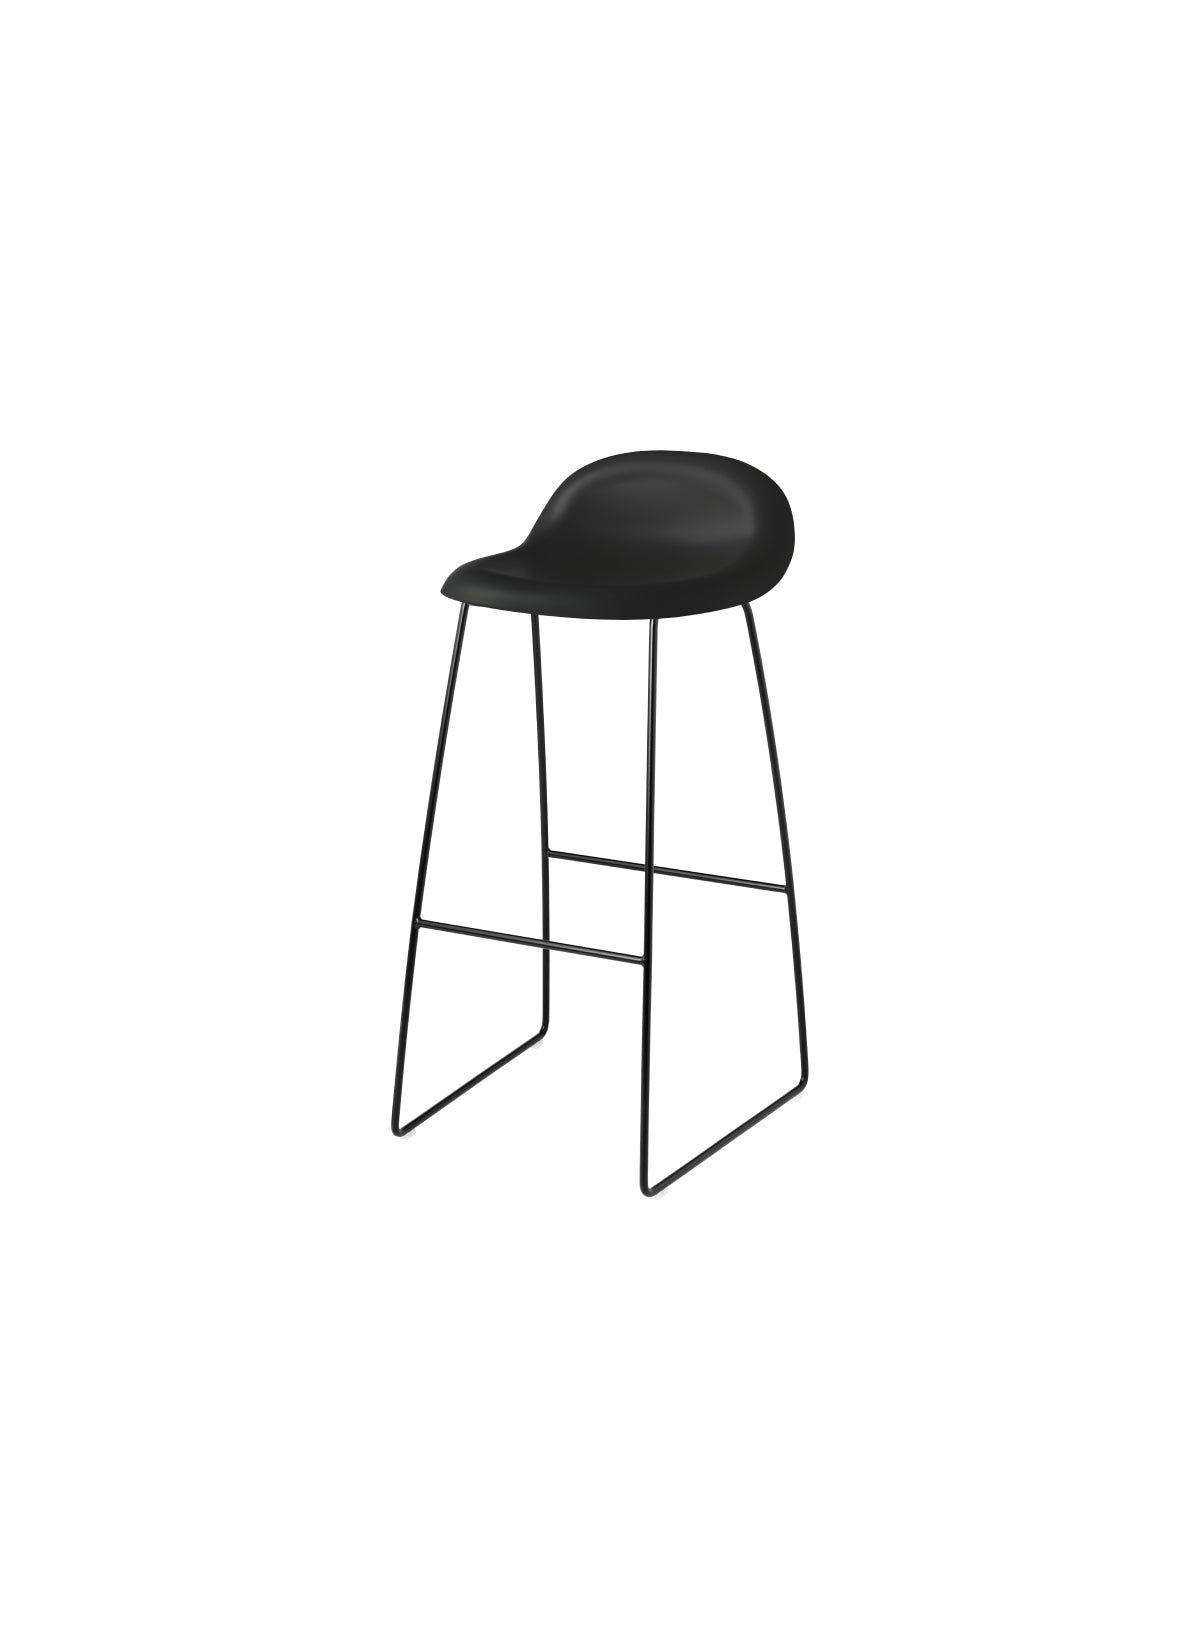 GUBI 3D Bar Stool - Un-Upholstered - Sledge Base - Plastic Shell by Gubi